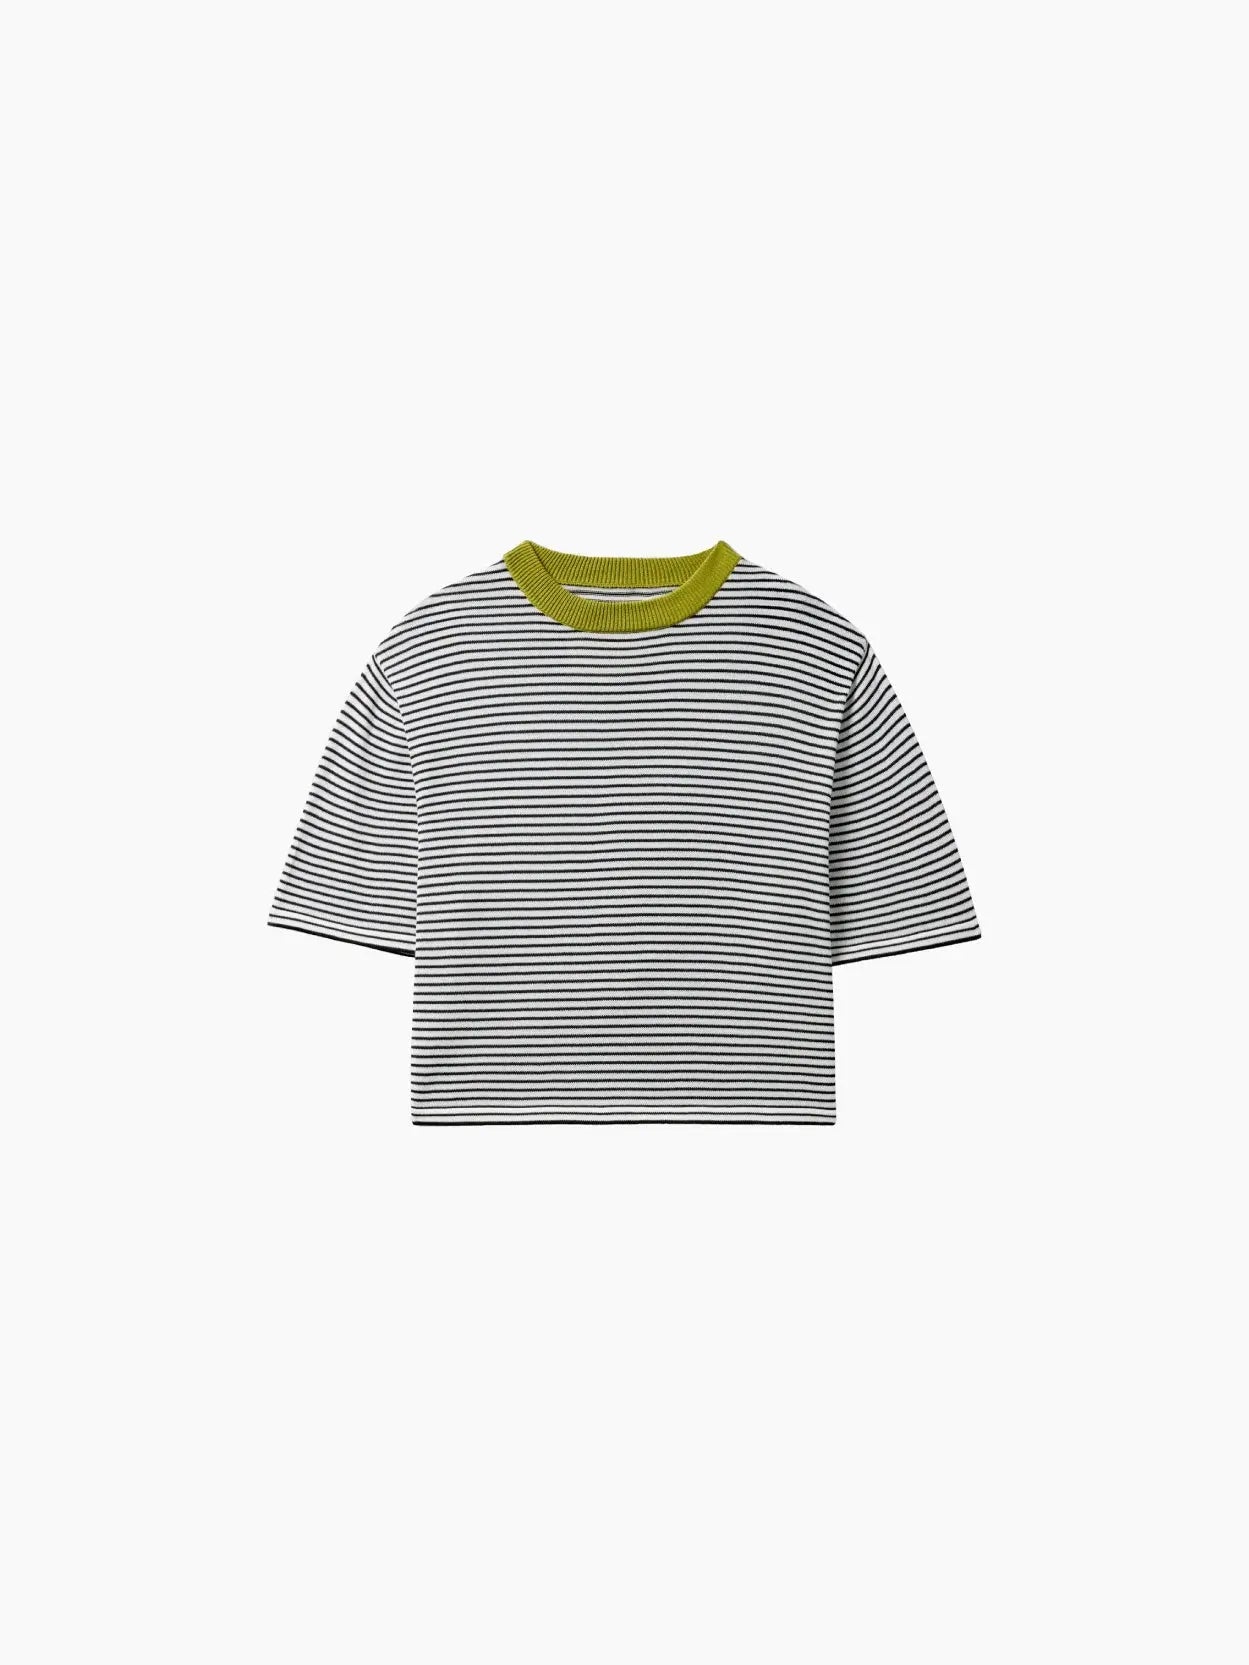 Cotton Striped T-Shirt Lime Cordera